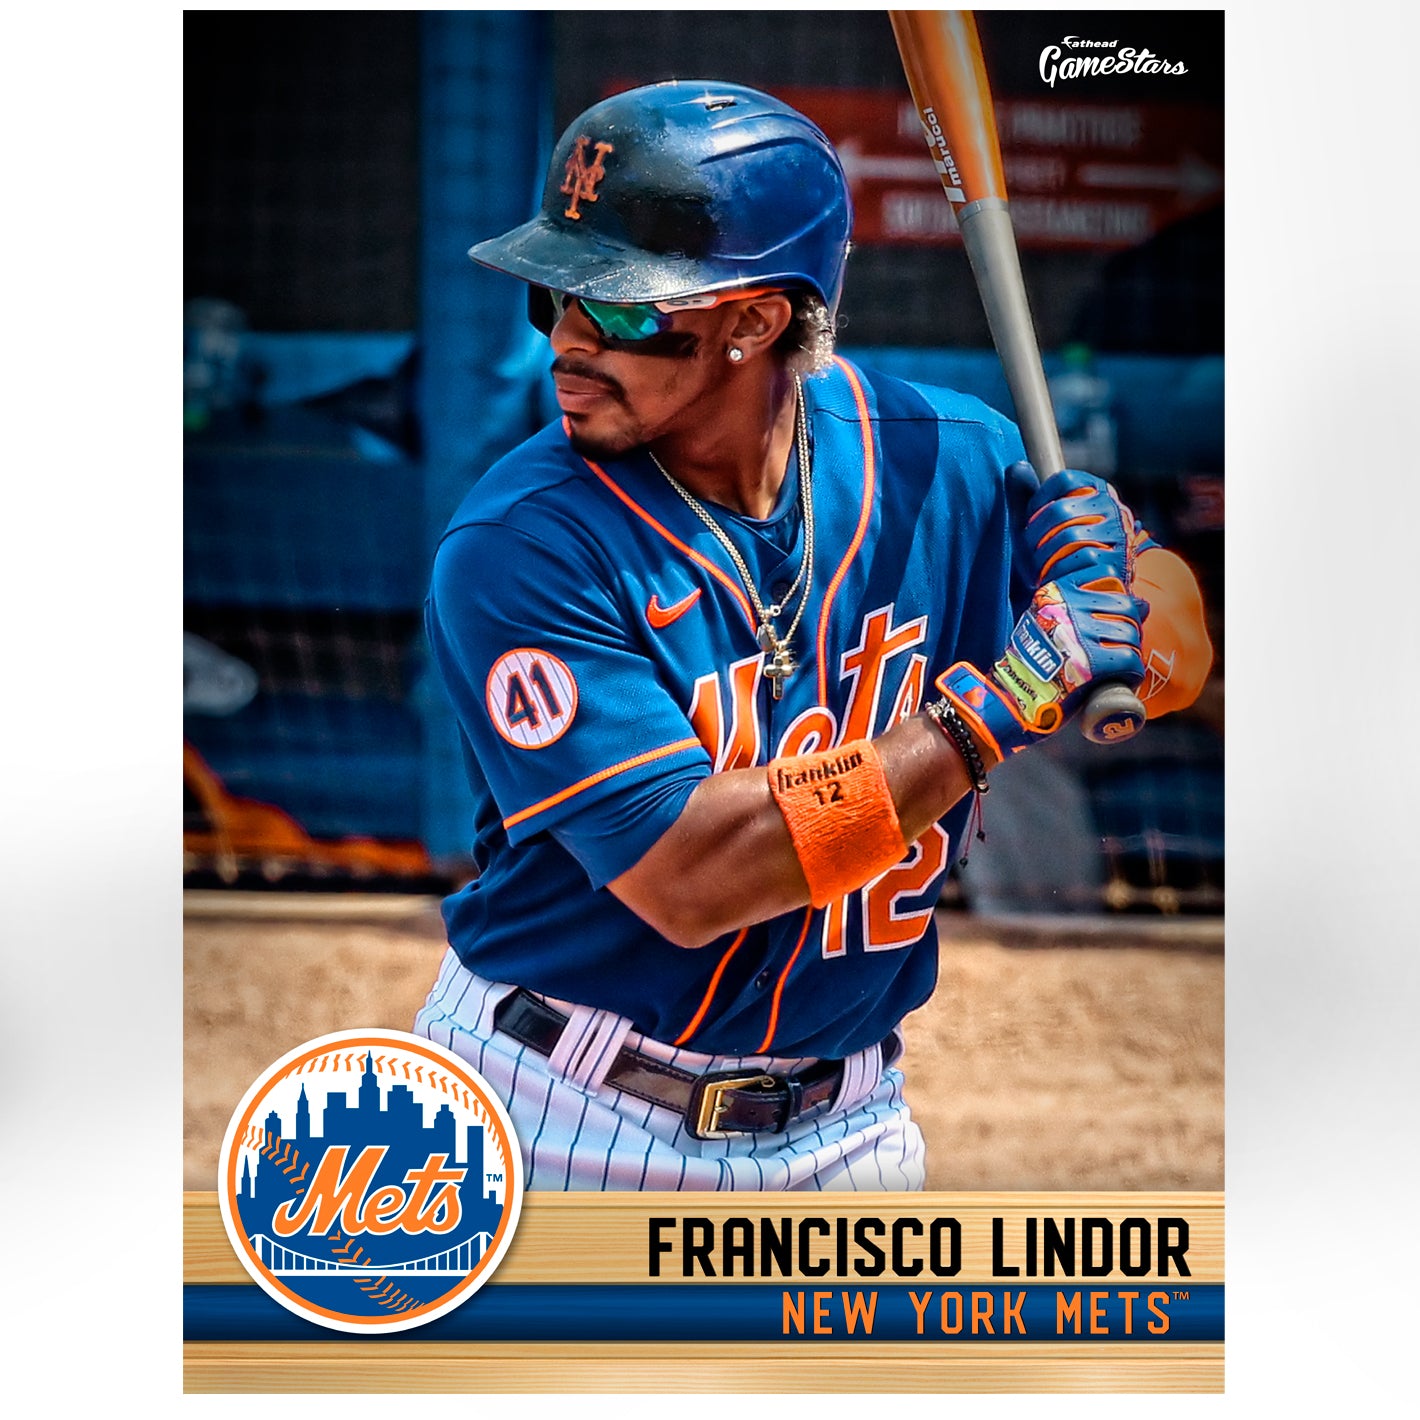 New York Mets: Francisco Lindor 2021 GameStar - Officially Licensed ML